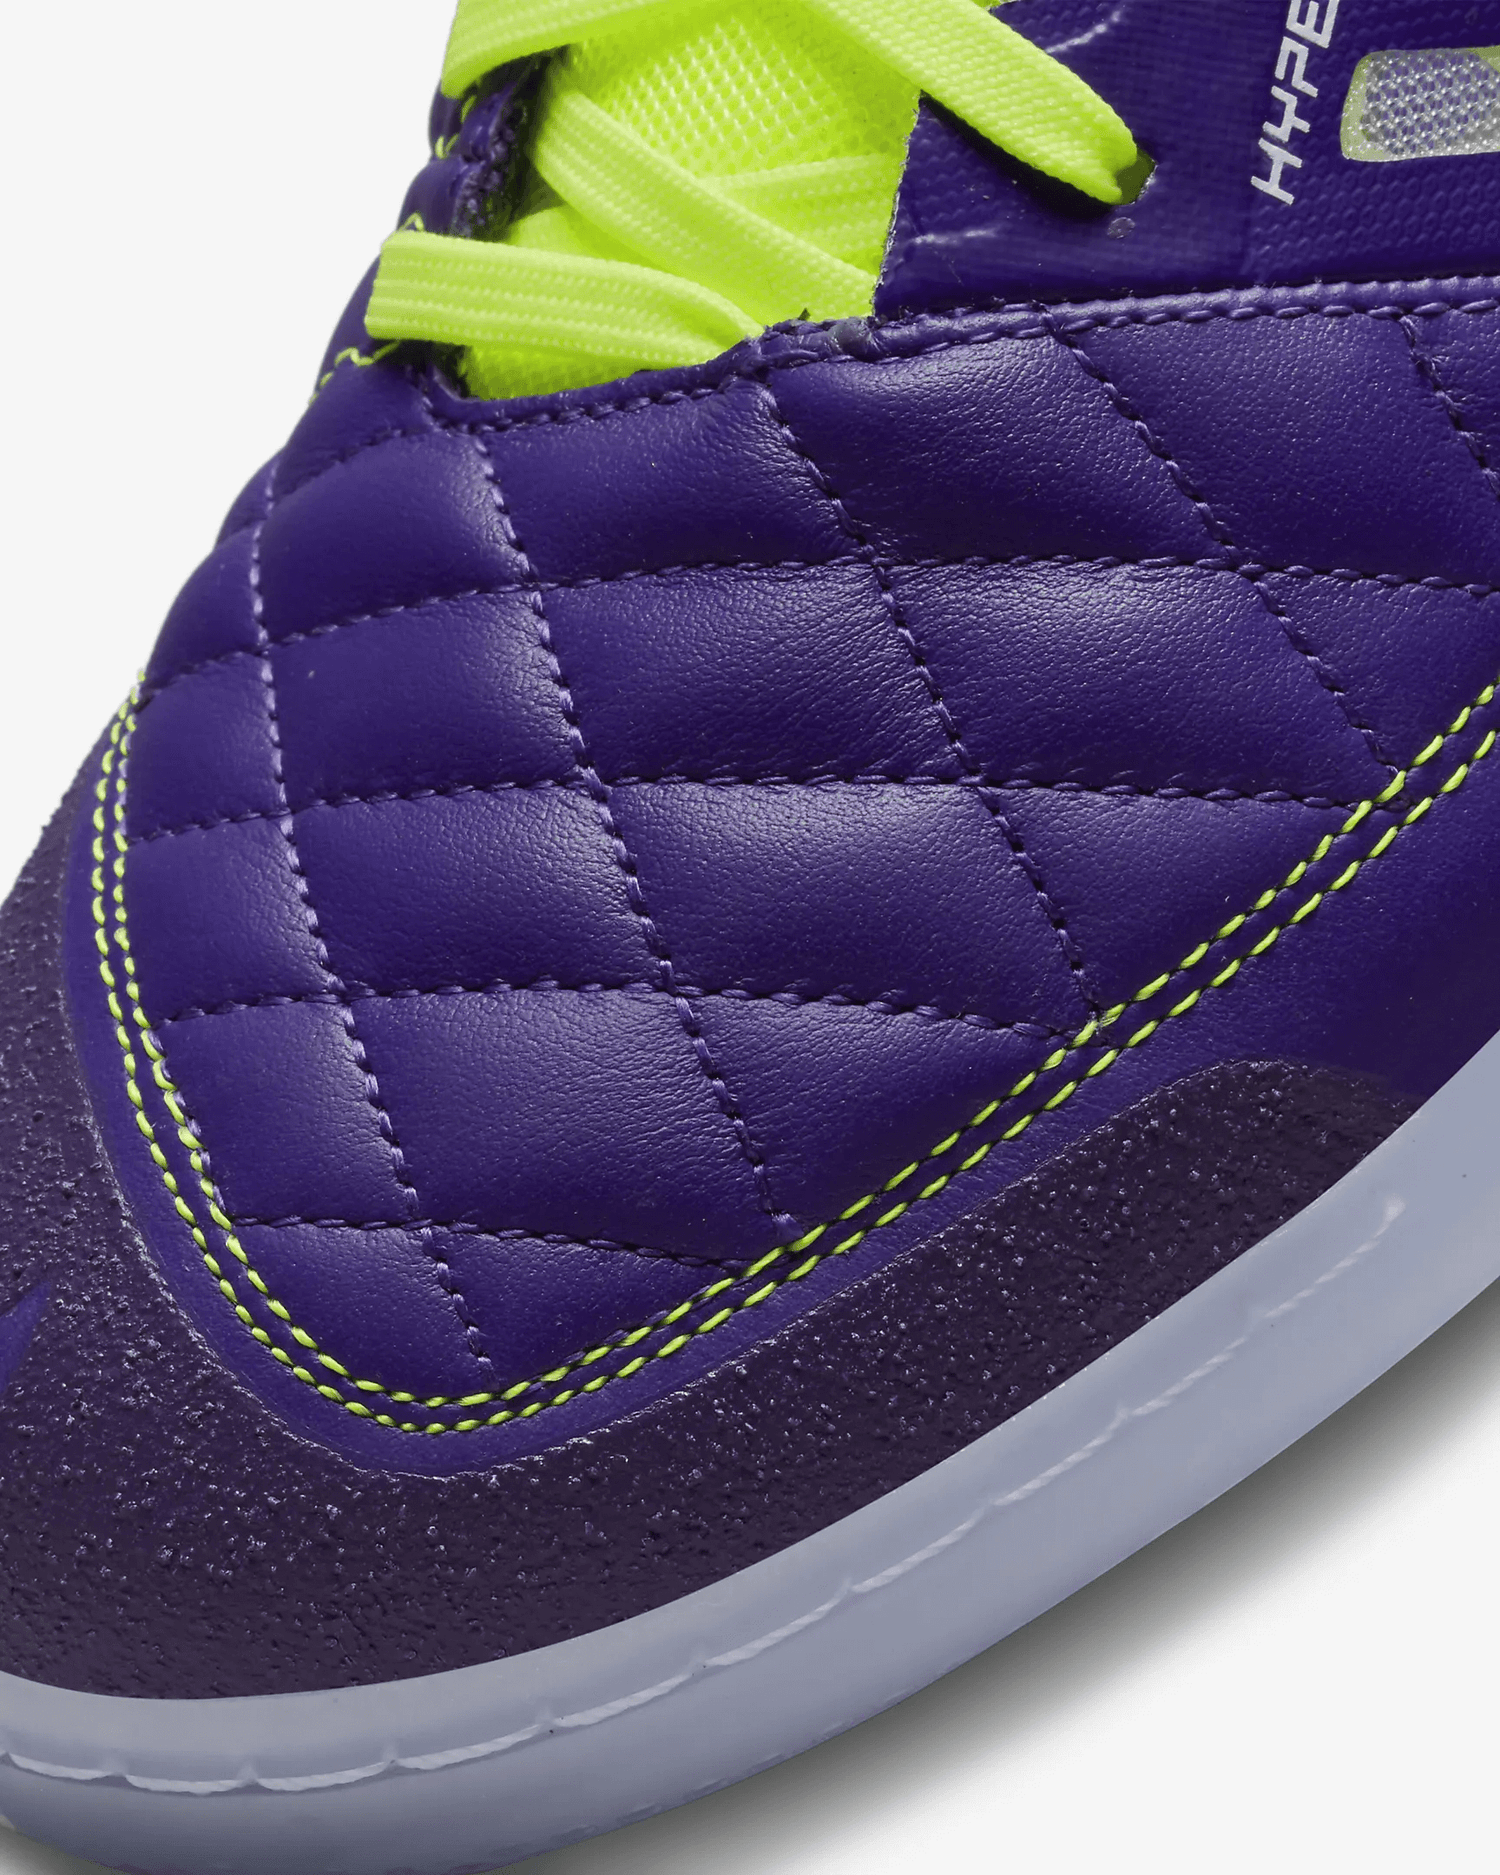 Nike Lunar Gato II Indoor - Purple-Volt (Detail 1)